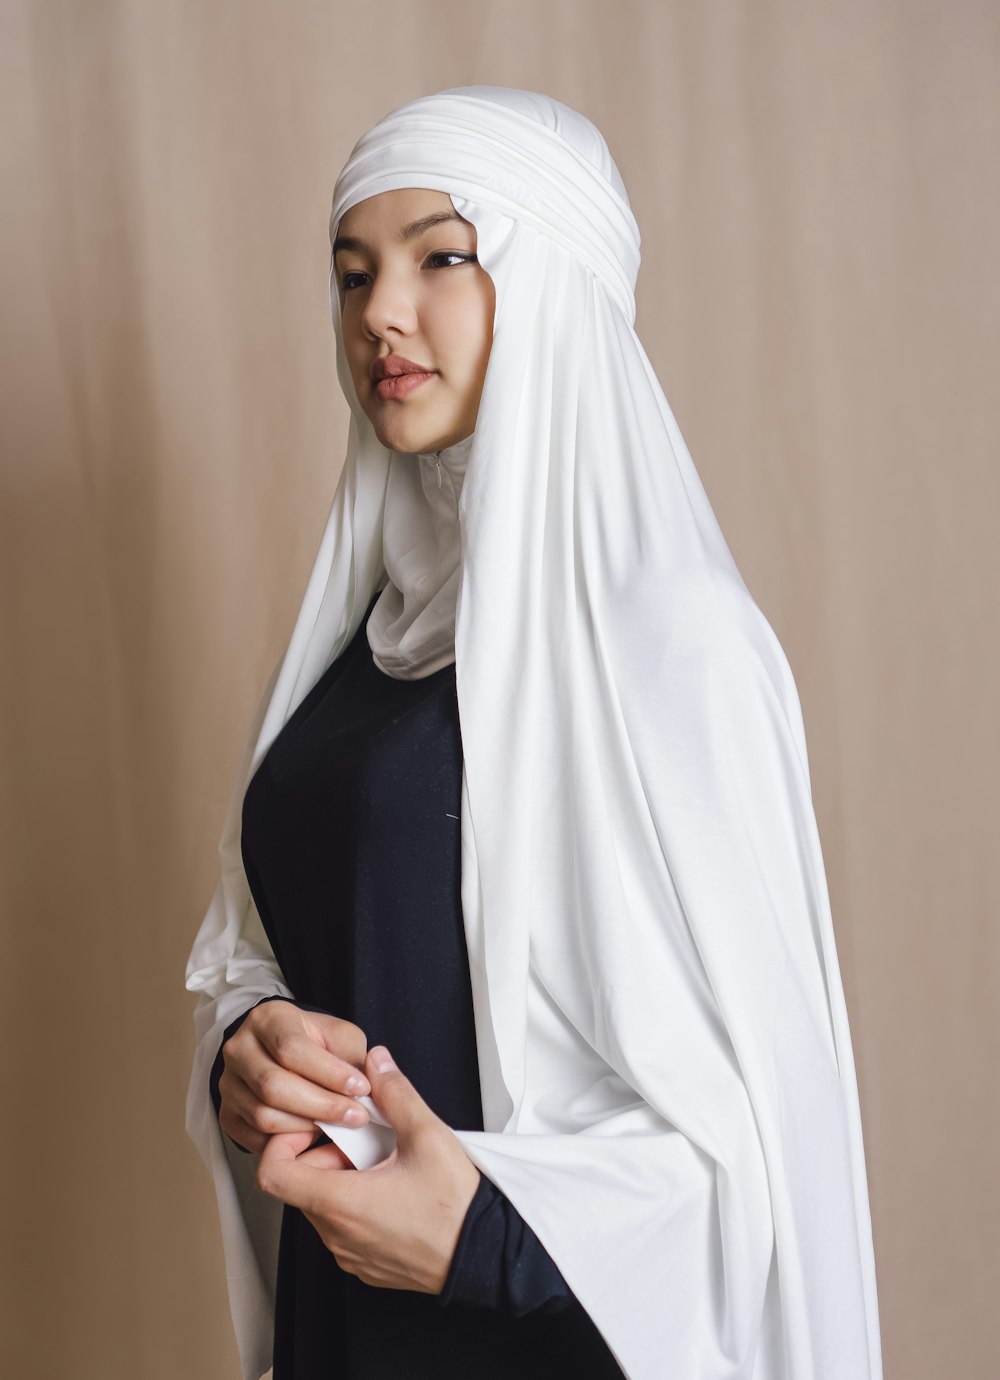 woman in white hijab standing near beige wall